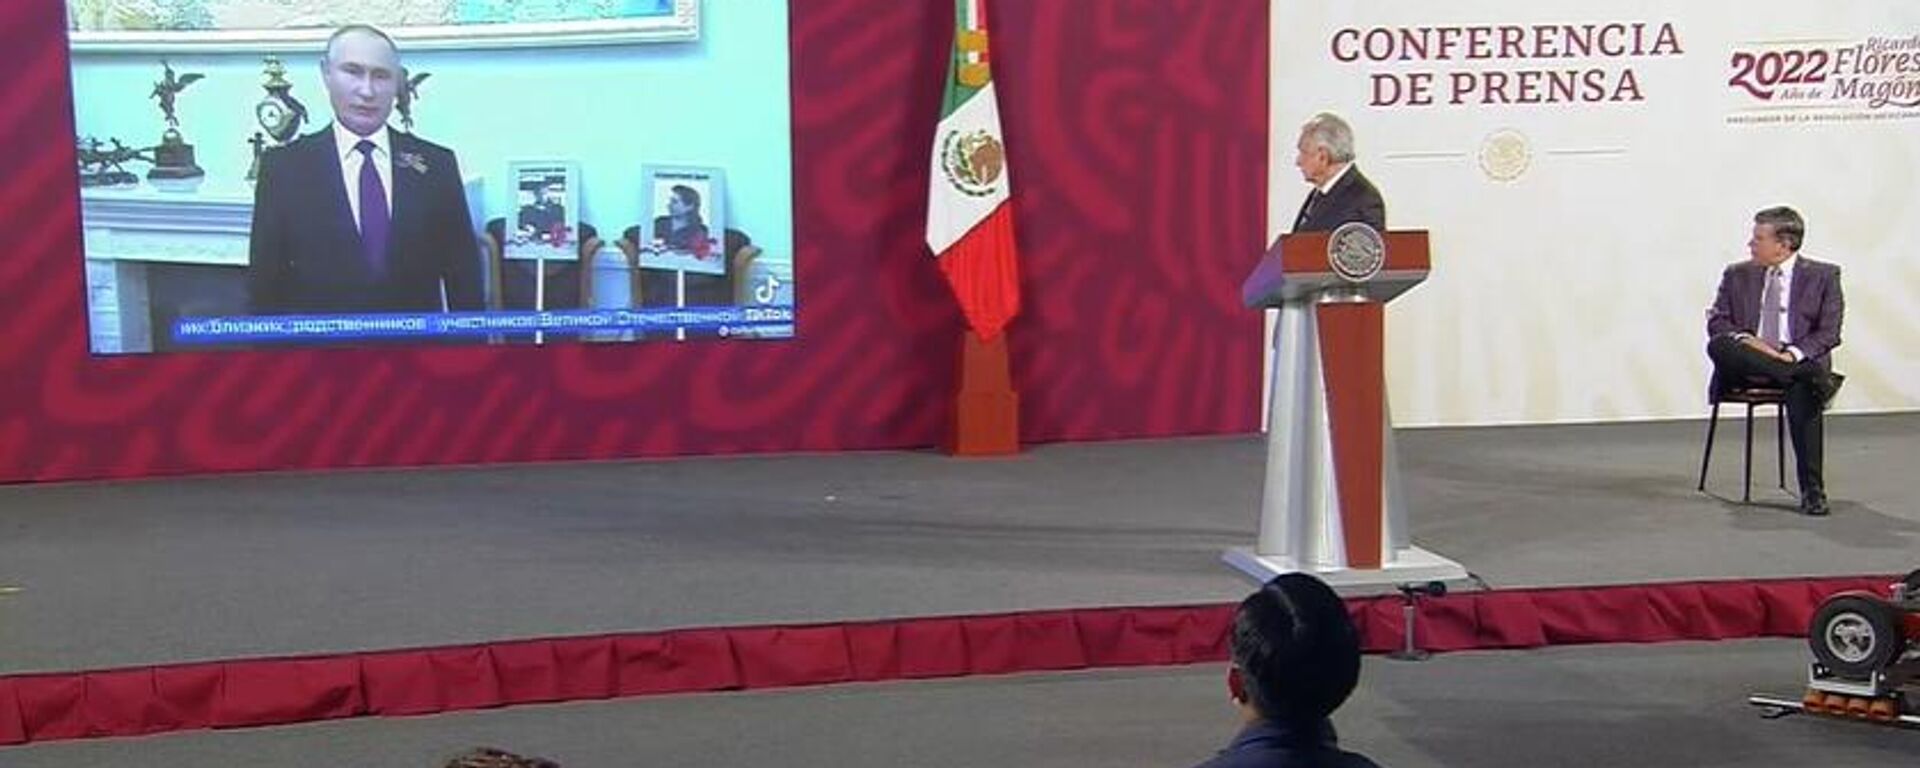 El presidente Andrés Manuel López Obrador muestra un video de Vladímir Putin - Sputnik Mundo, 1920, 28.02.2022